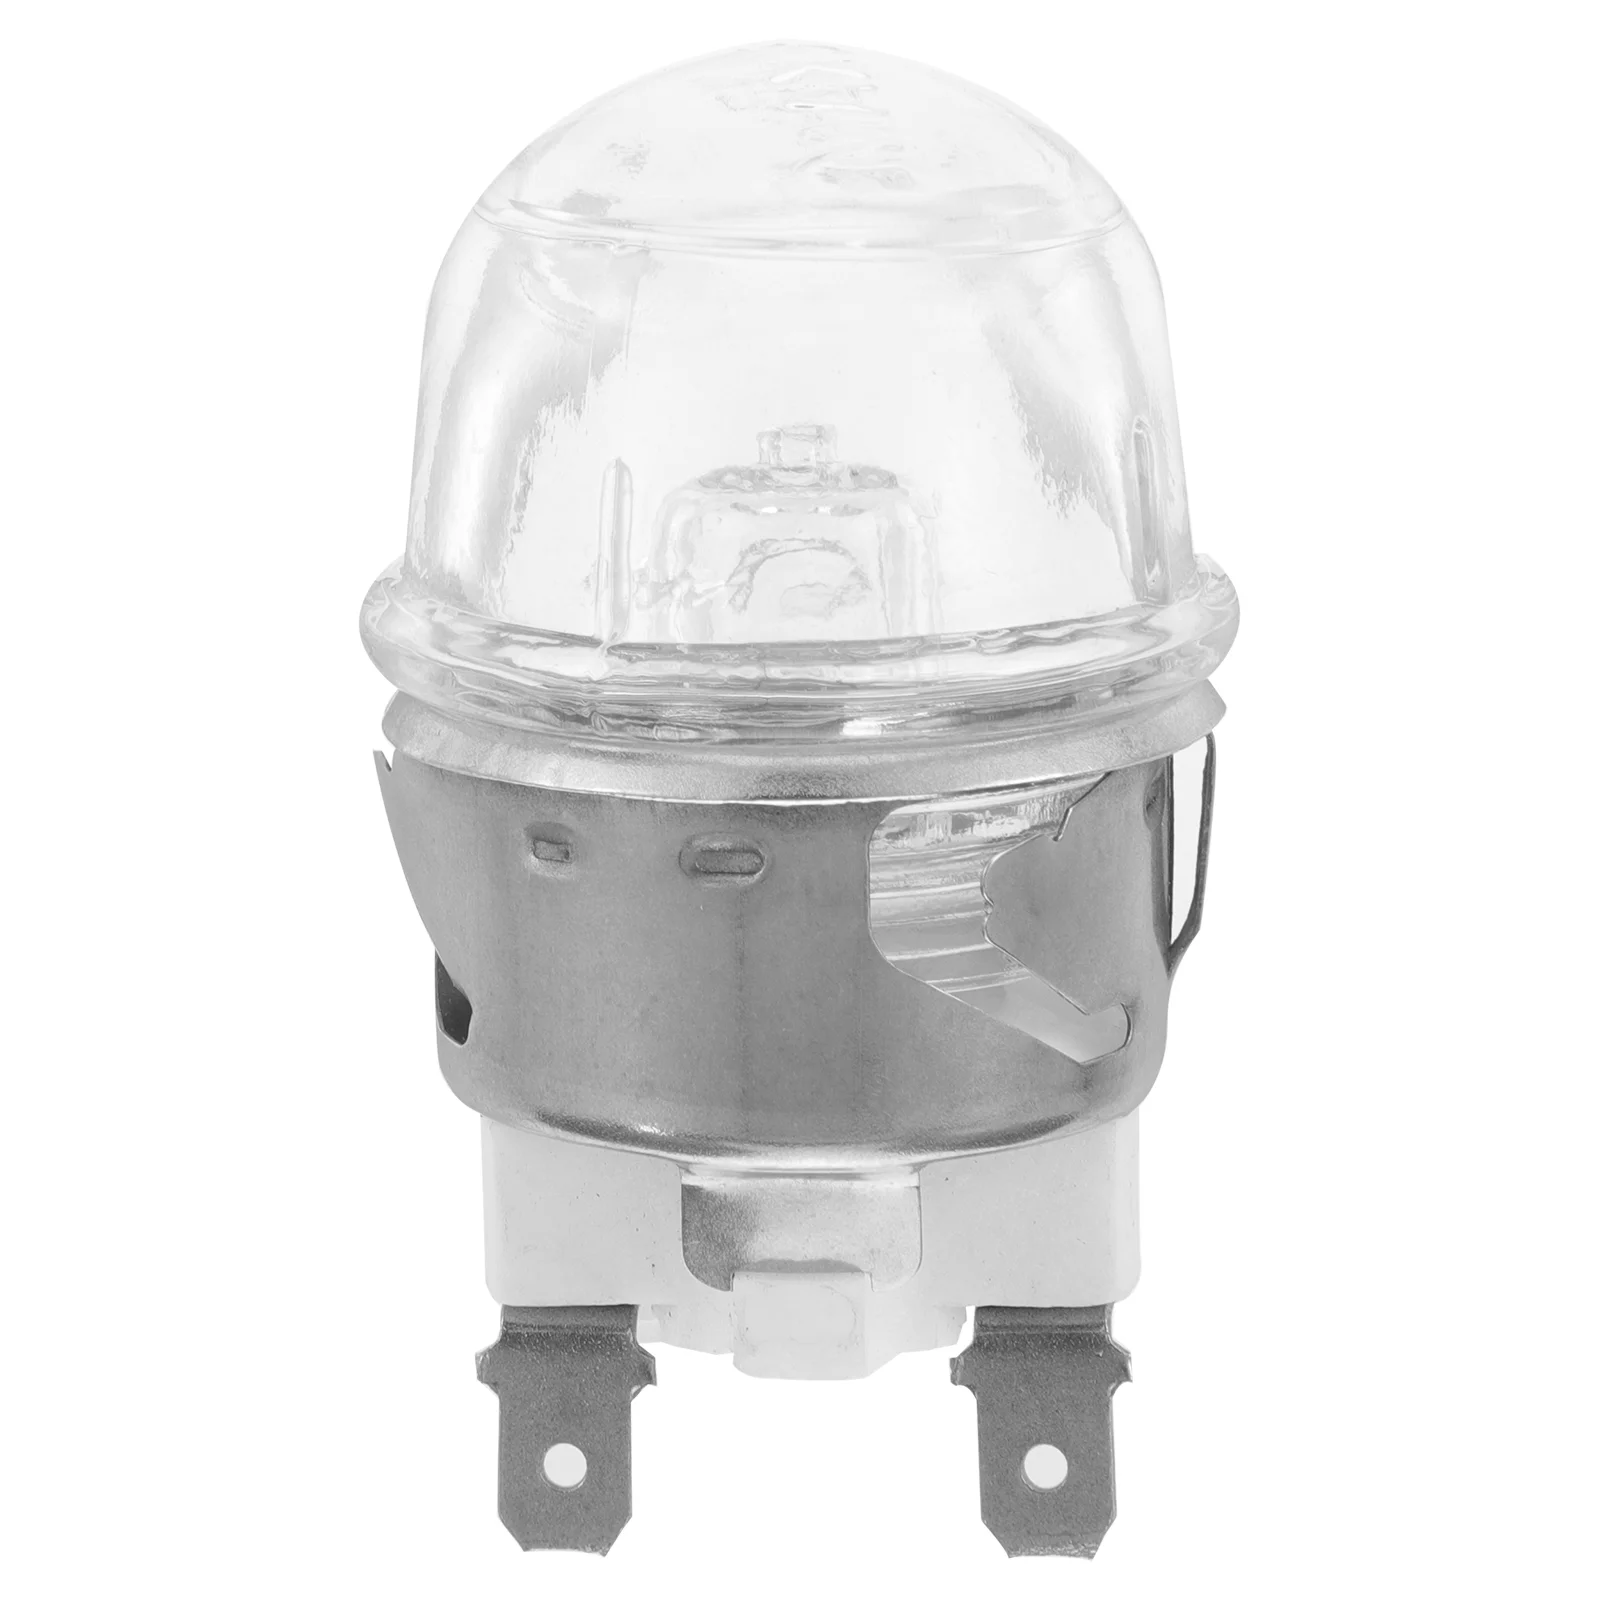 

G9 Light Holder Bulb Socket Oven Lamp Outlet High Temperature Resistance Adapter